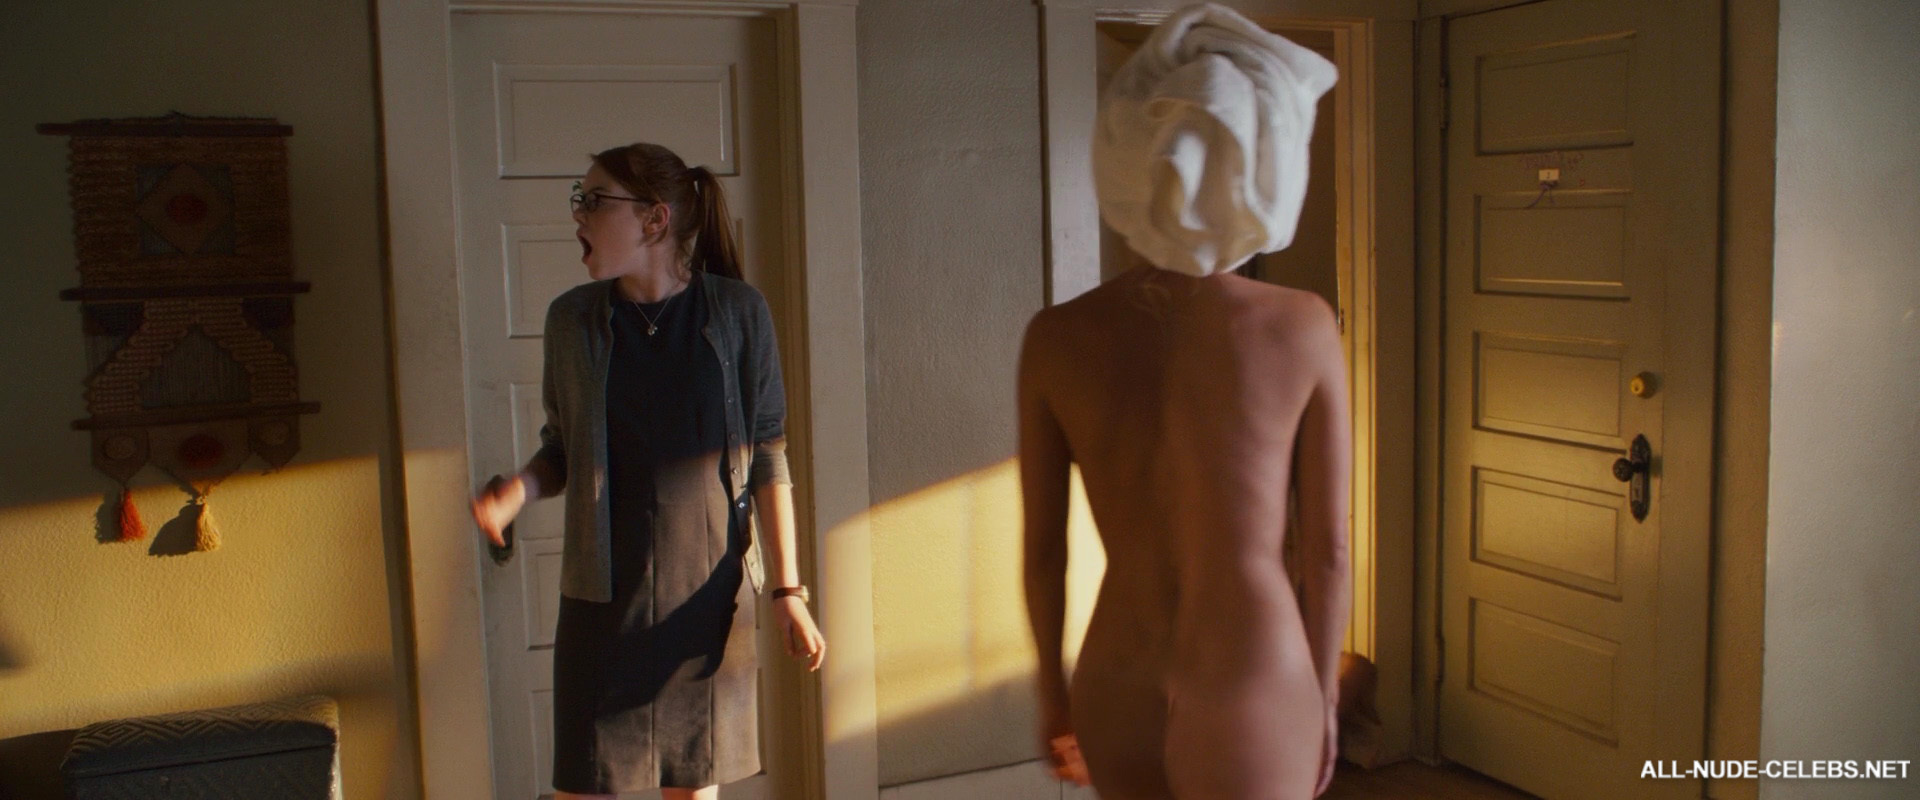 Anna Faris naked movie scenes.